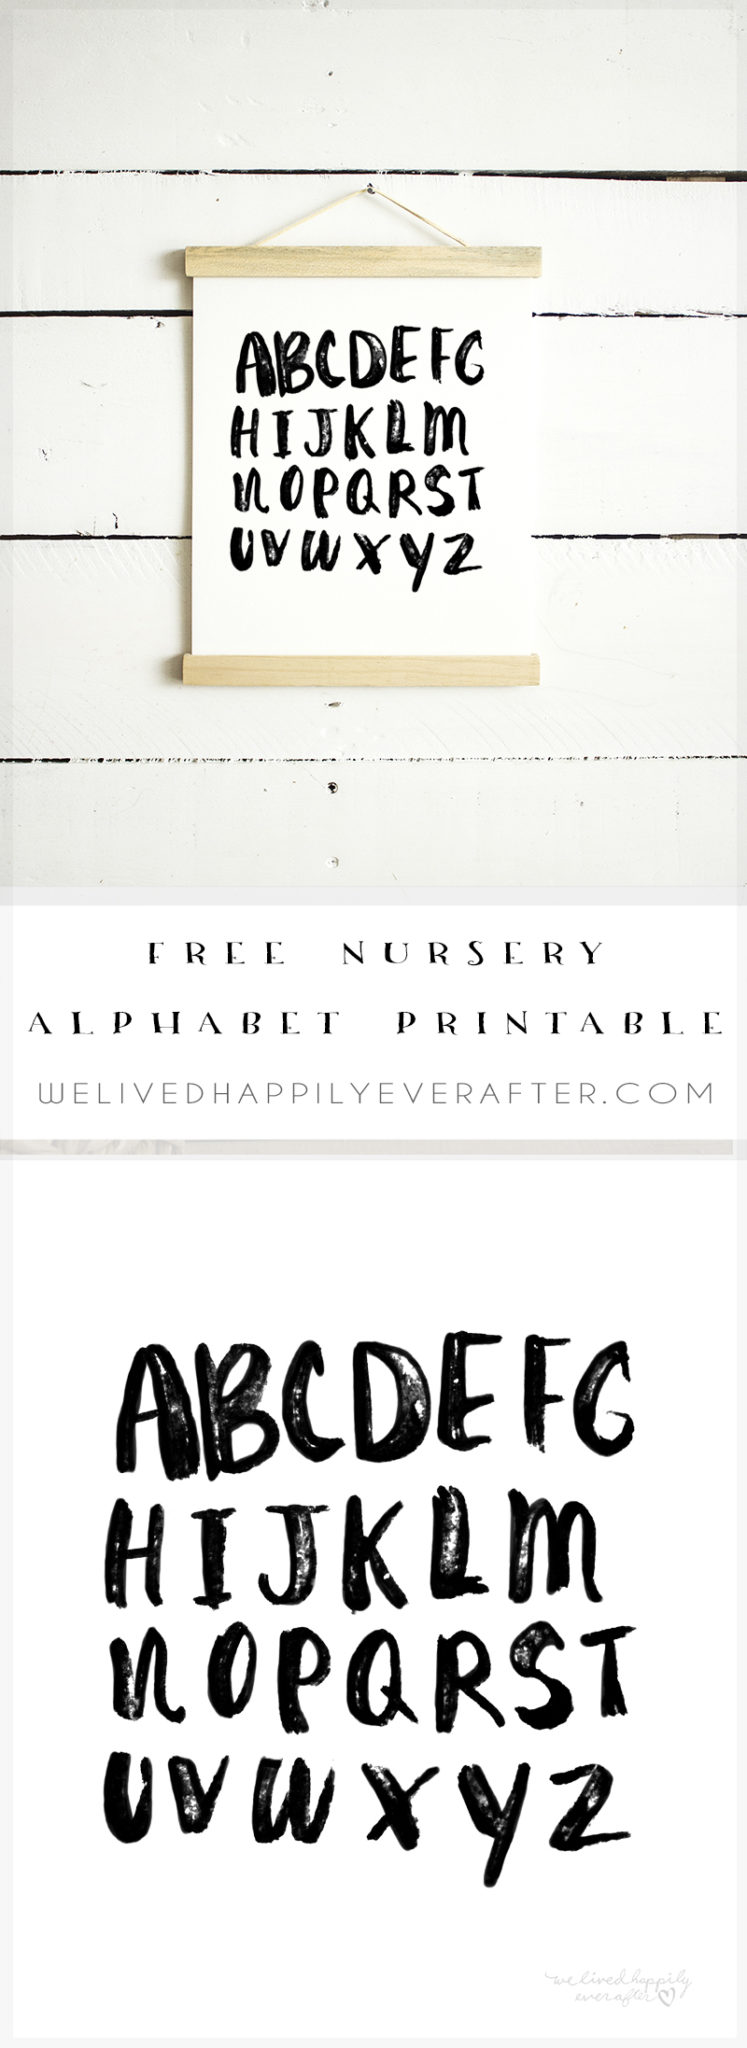 Free Nursery Alphabet ABC Printable